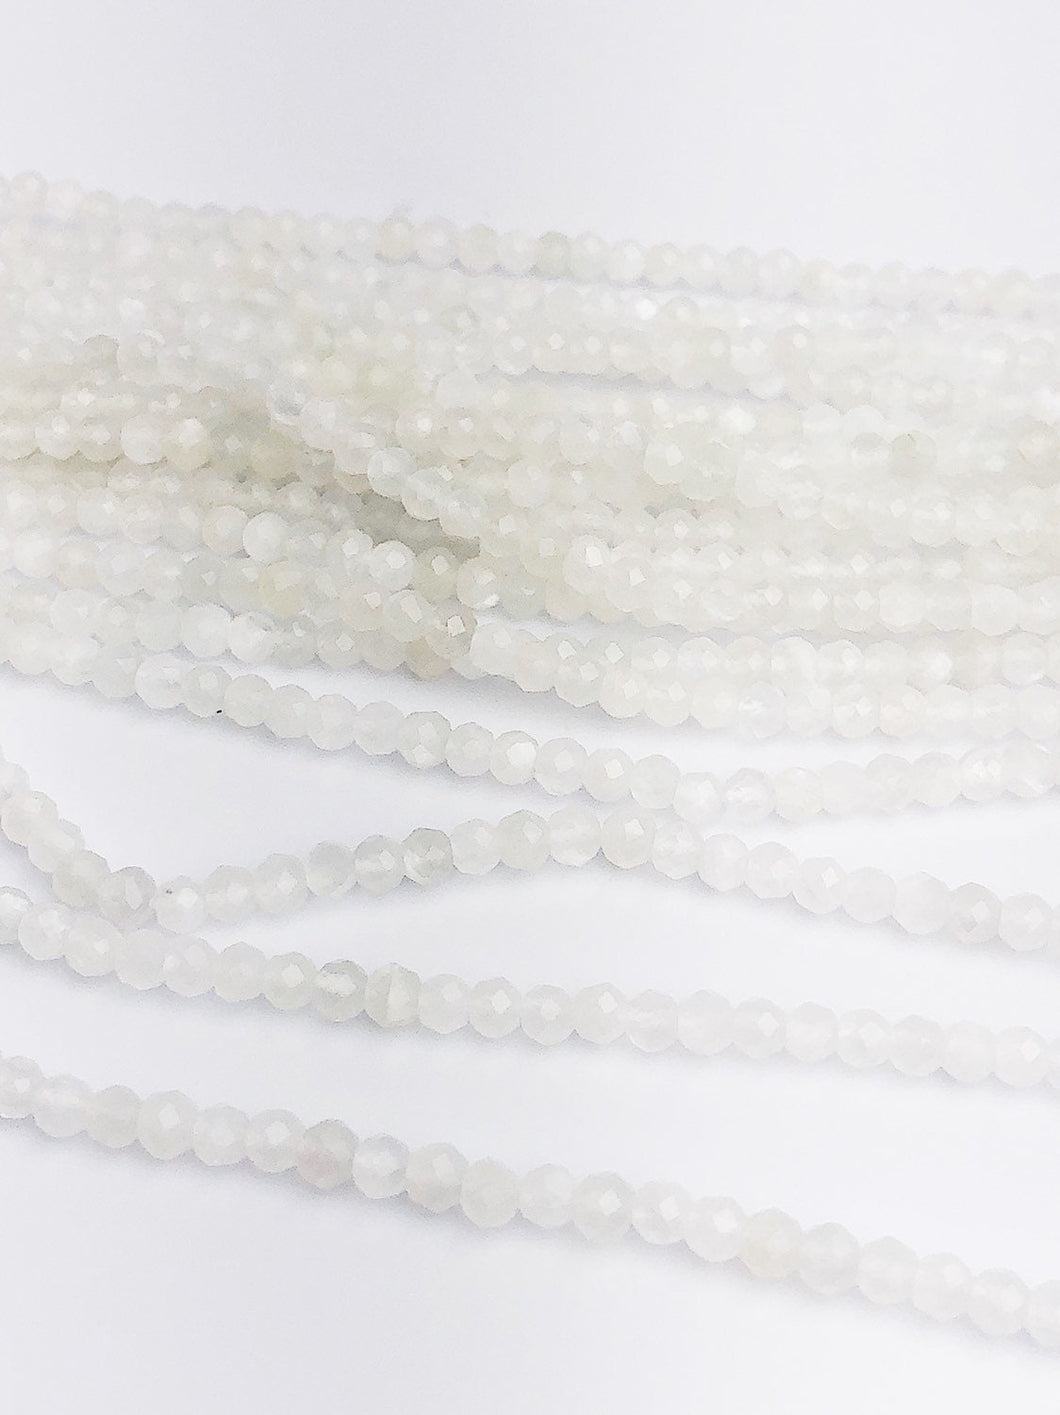 HALF OFF SALE - White Moonstone Gemstone Beads, Full Strand, Semi Precious Gemstone, 13